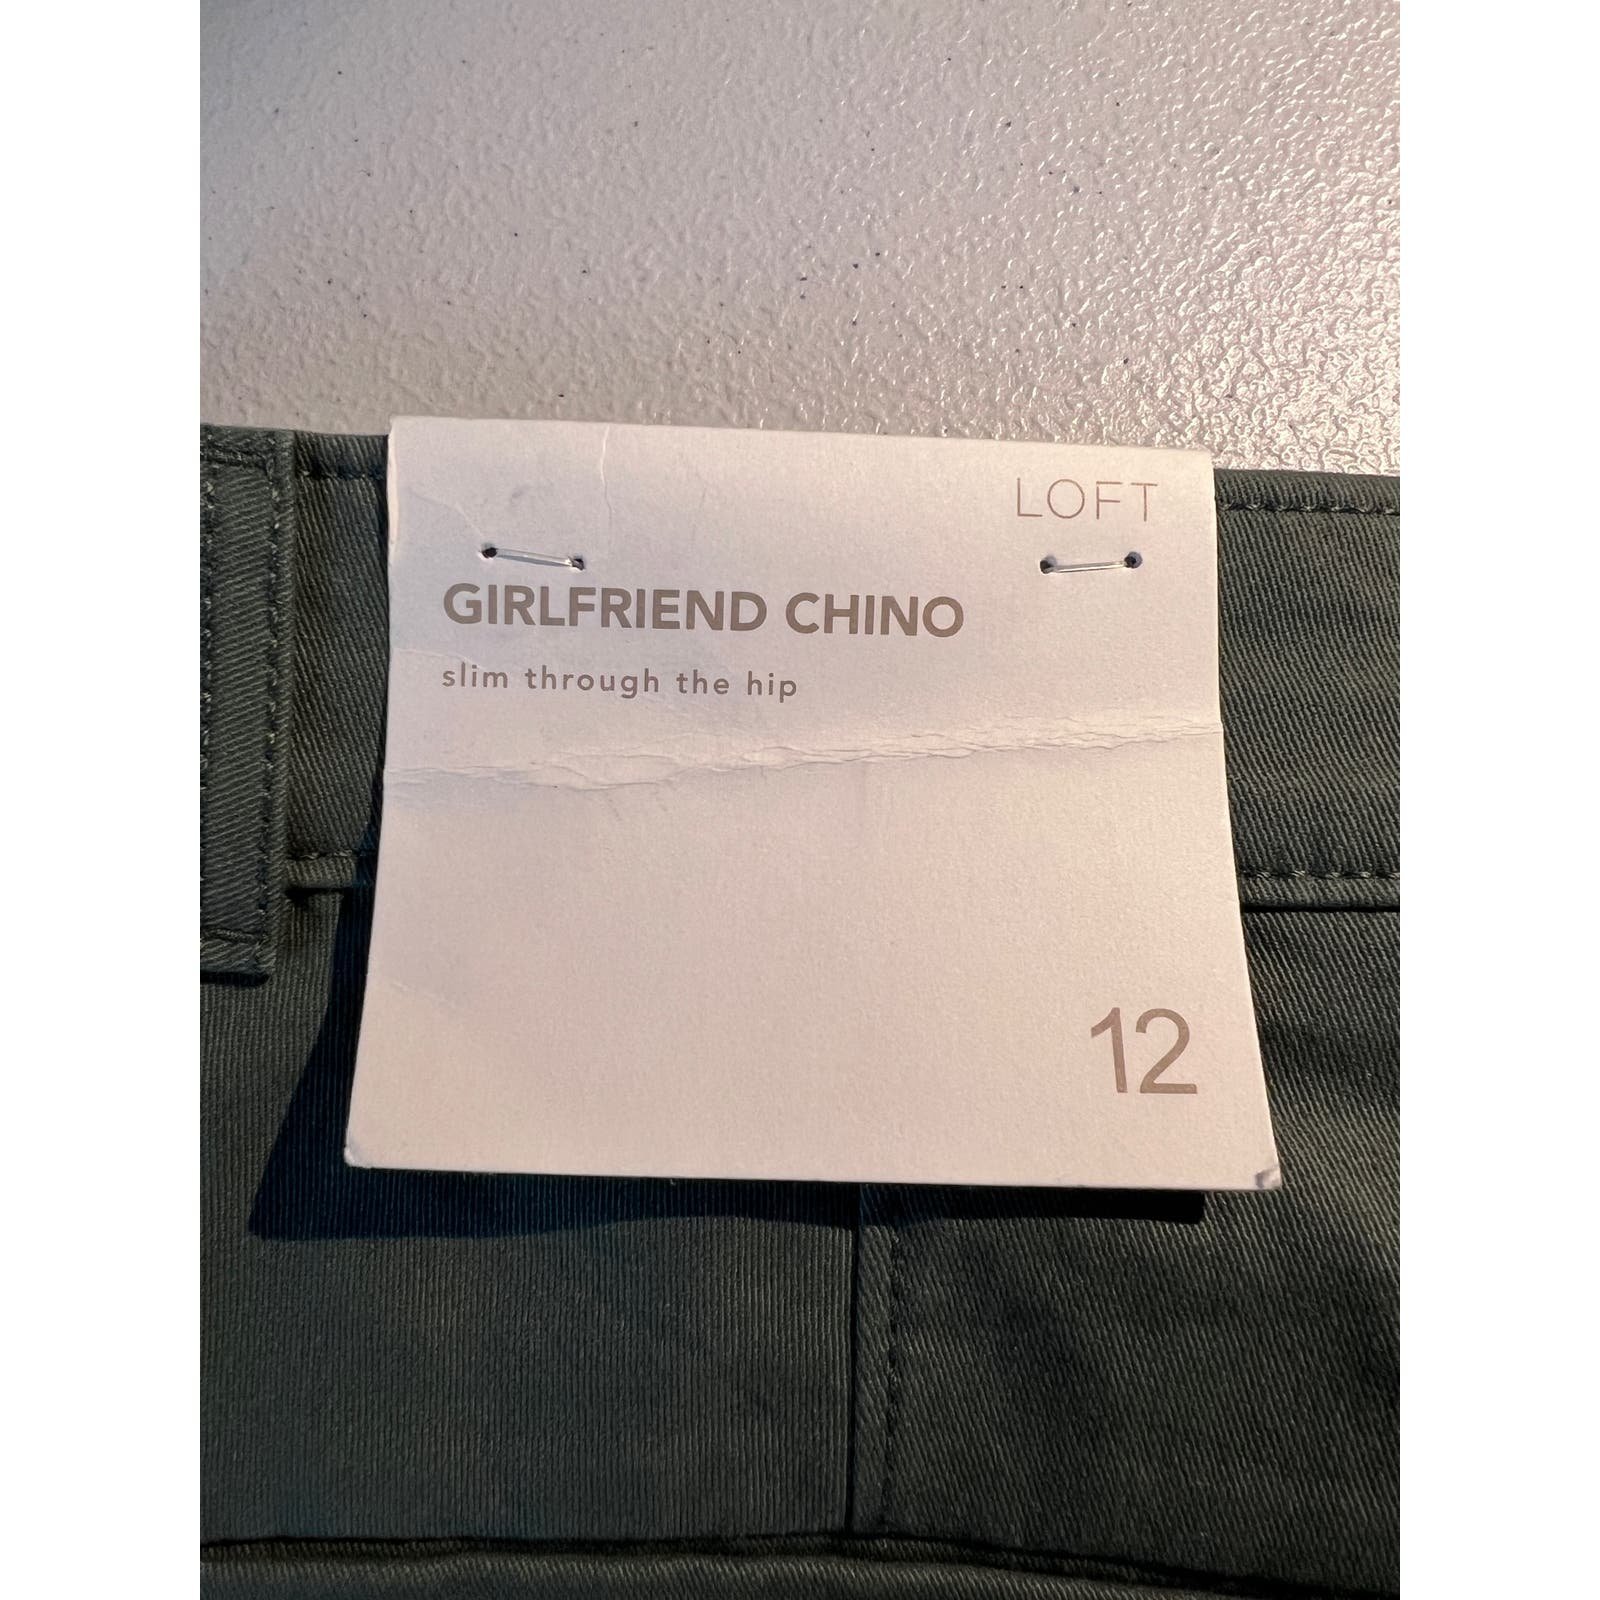 Beautiful NEW LOFT Women´s Size 12 Girlfriend Chino Green Casual Basic Career Office Pants izdjmKm4j Great